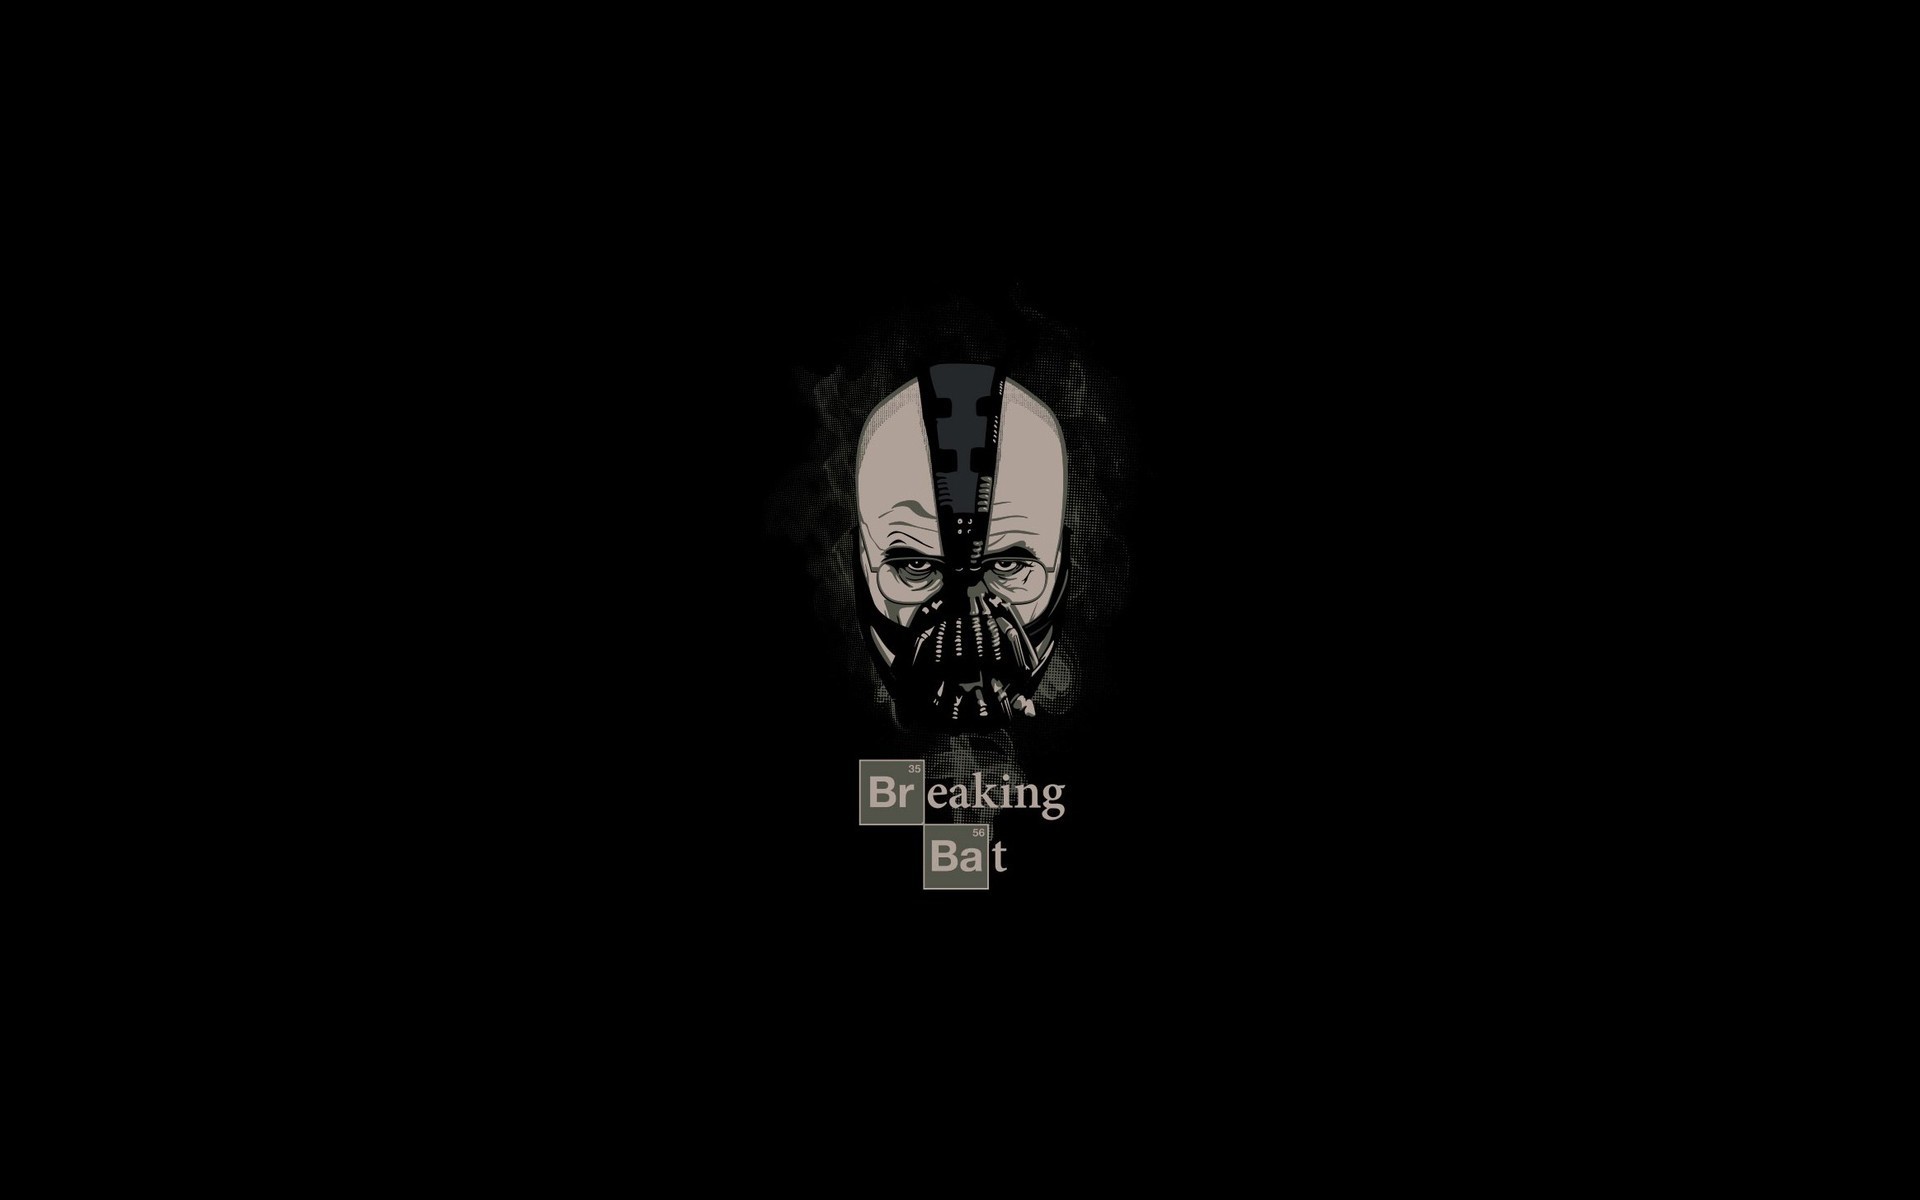 Breaking Bad Walter White Mask Bane The Dark Knight Rises 1920x1200